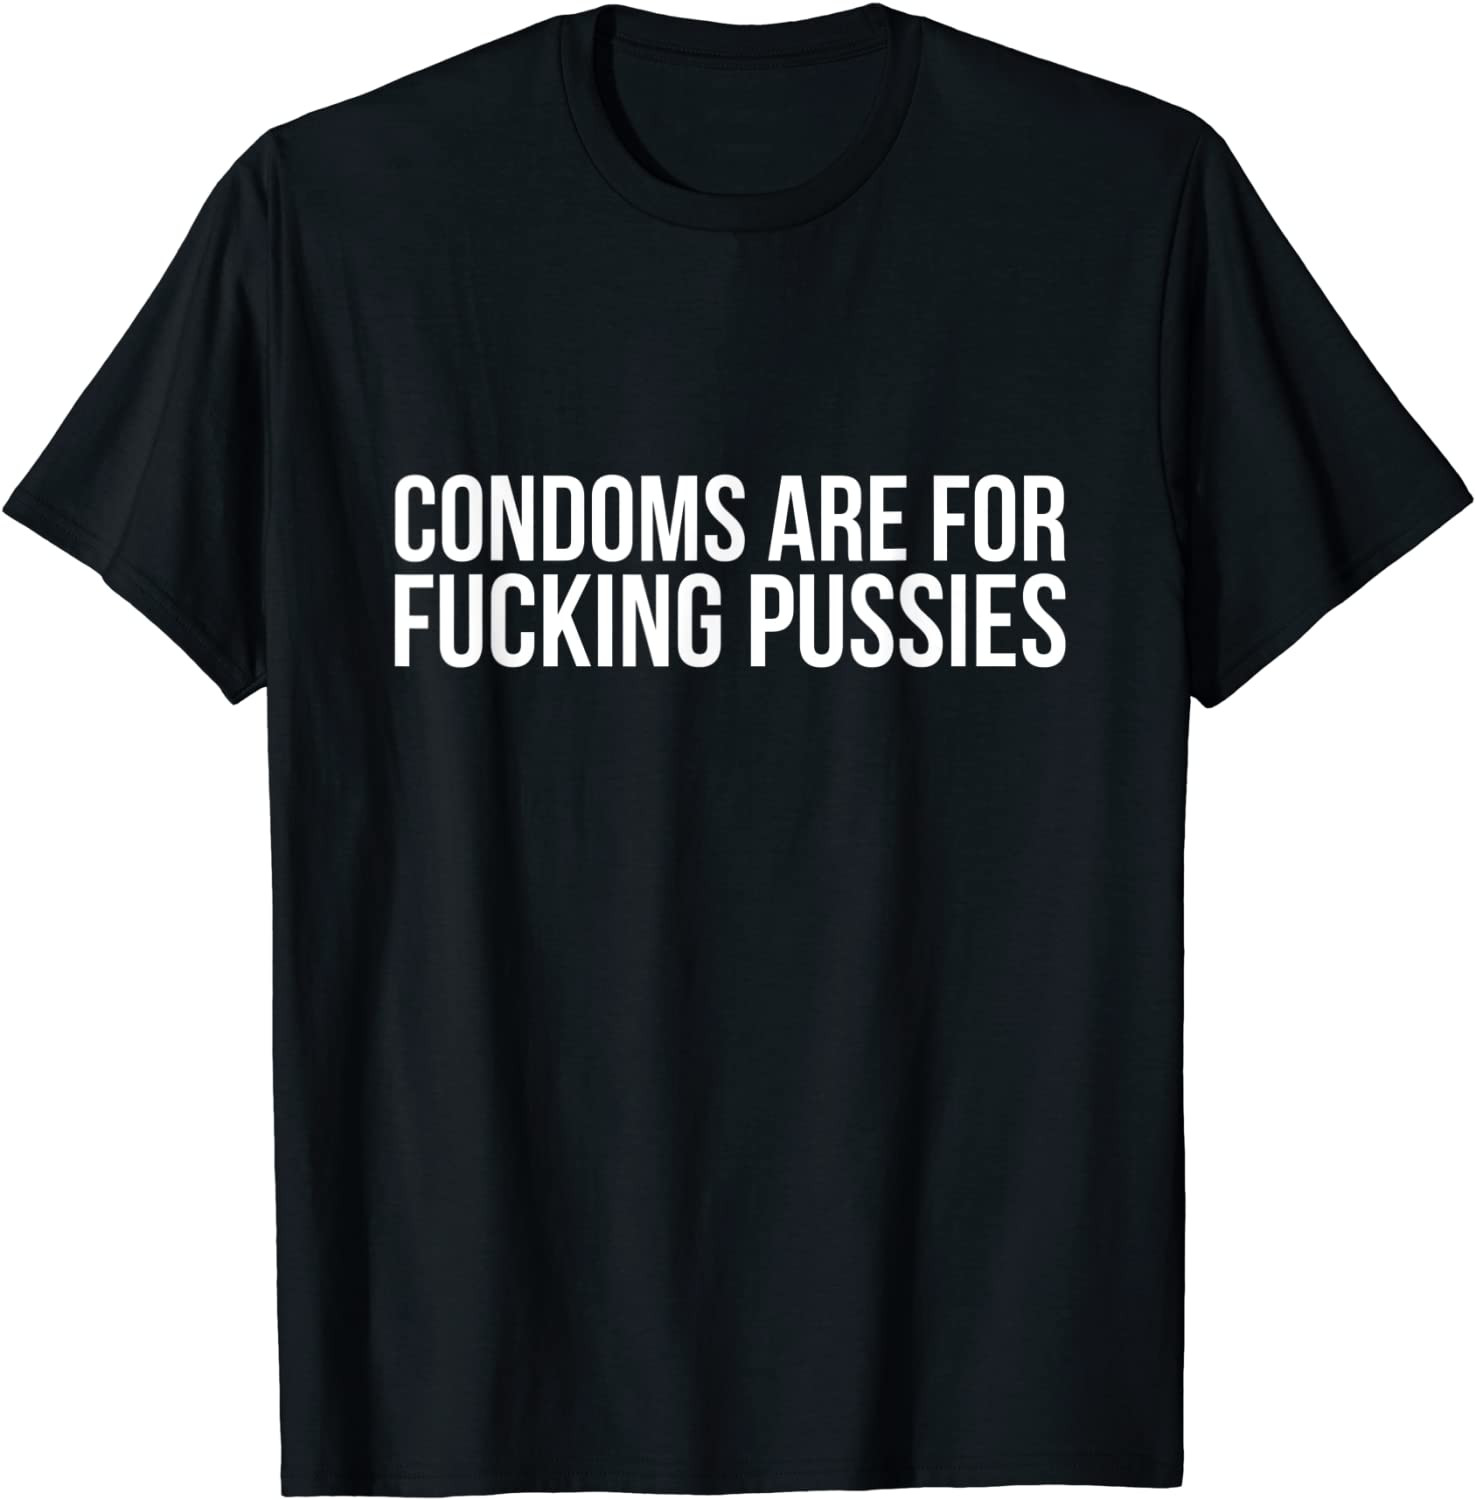 Rude Sexual Humor T-Shirt